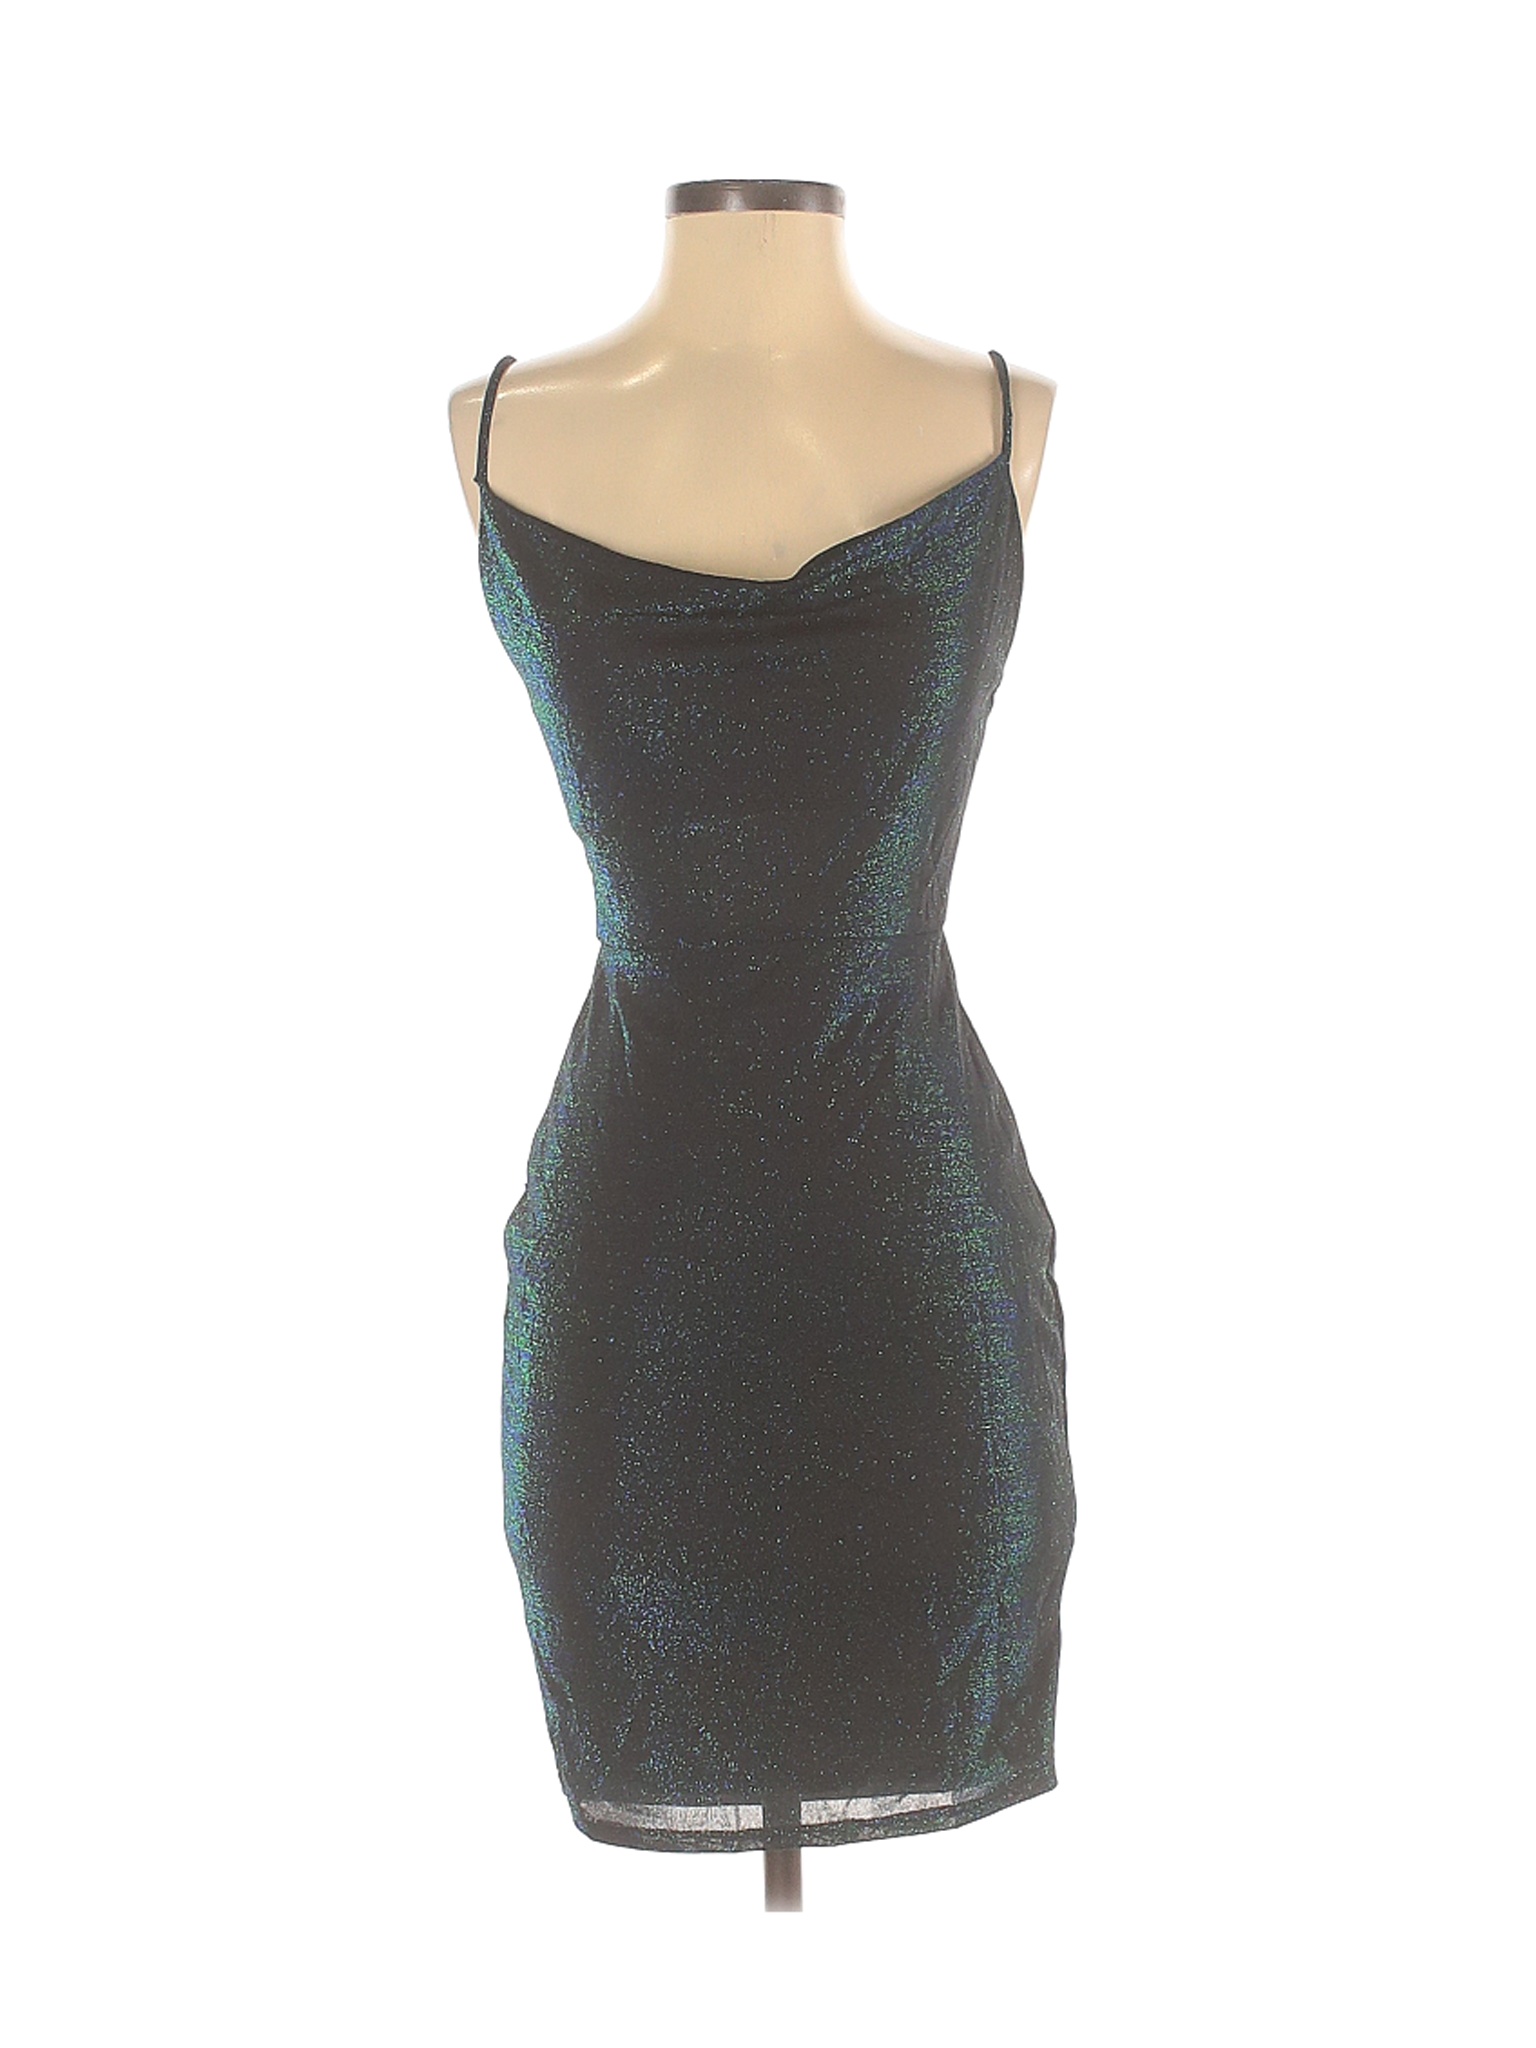 NWT Charlotte Russe Women Green Cocktail Dress XS | eBay